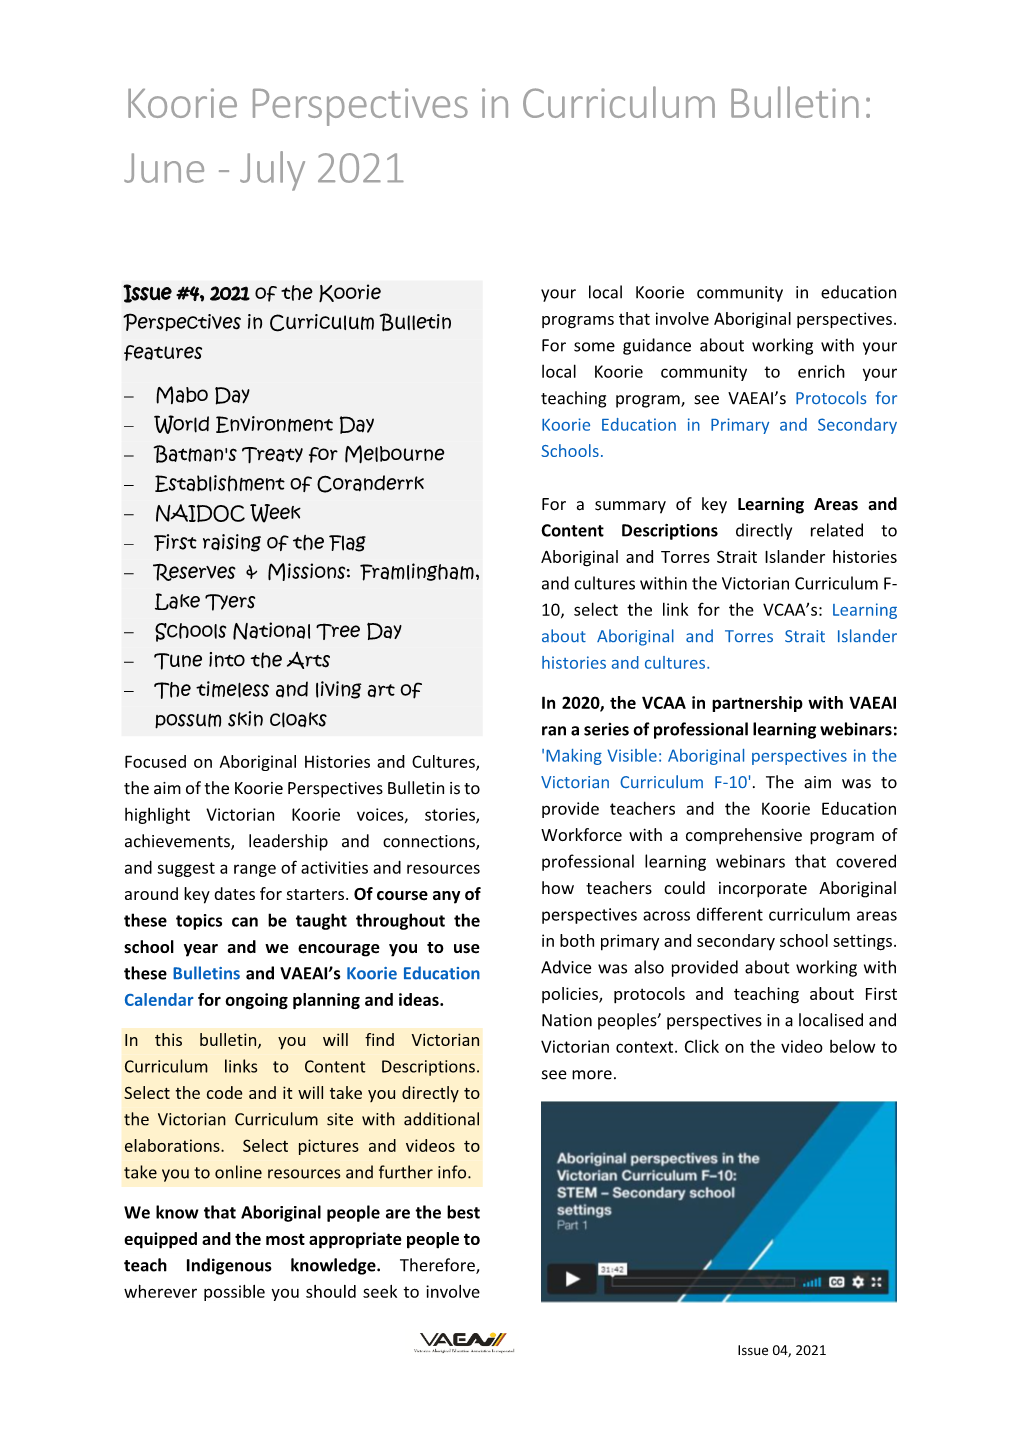 Koorie Perspectives in Curriculum Bulletin: June - July 2021